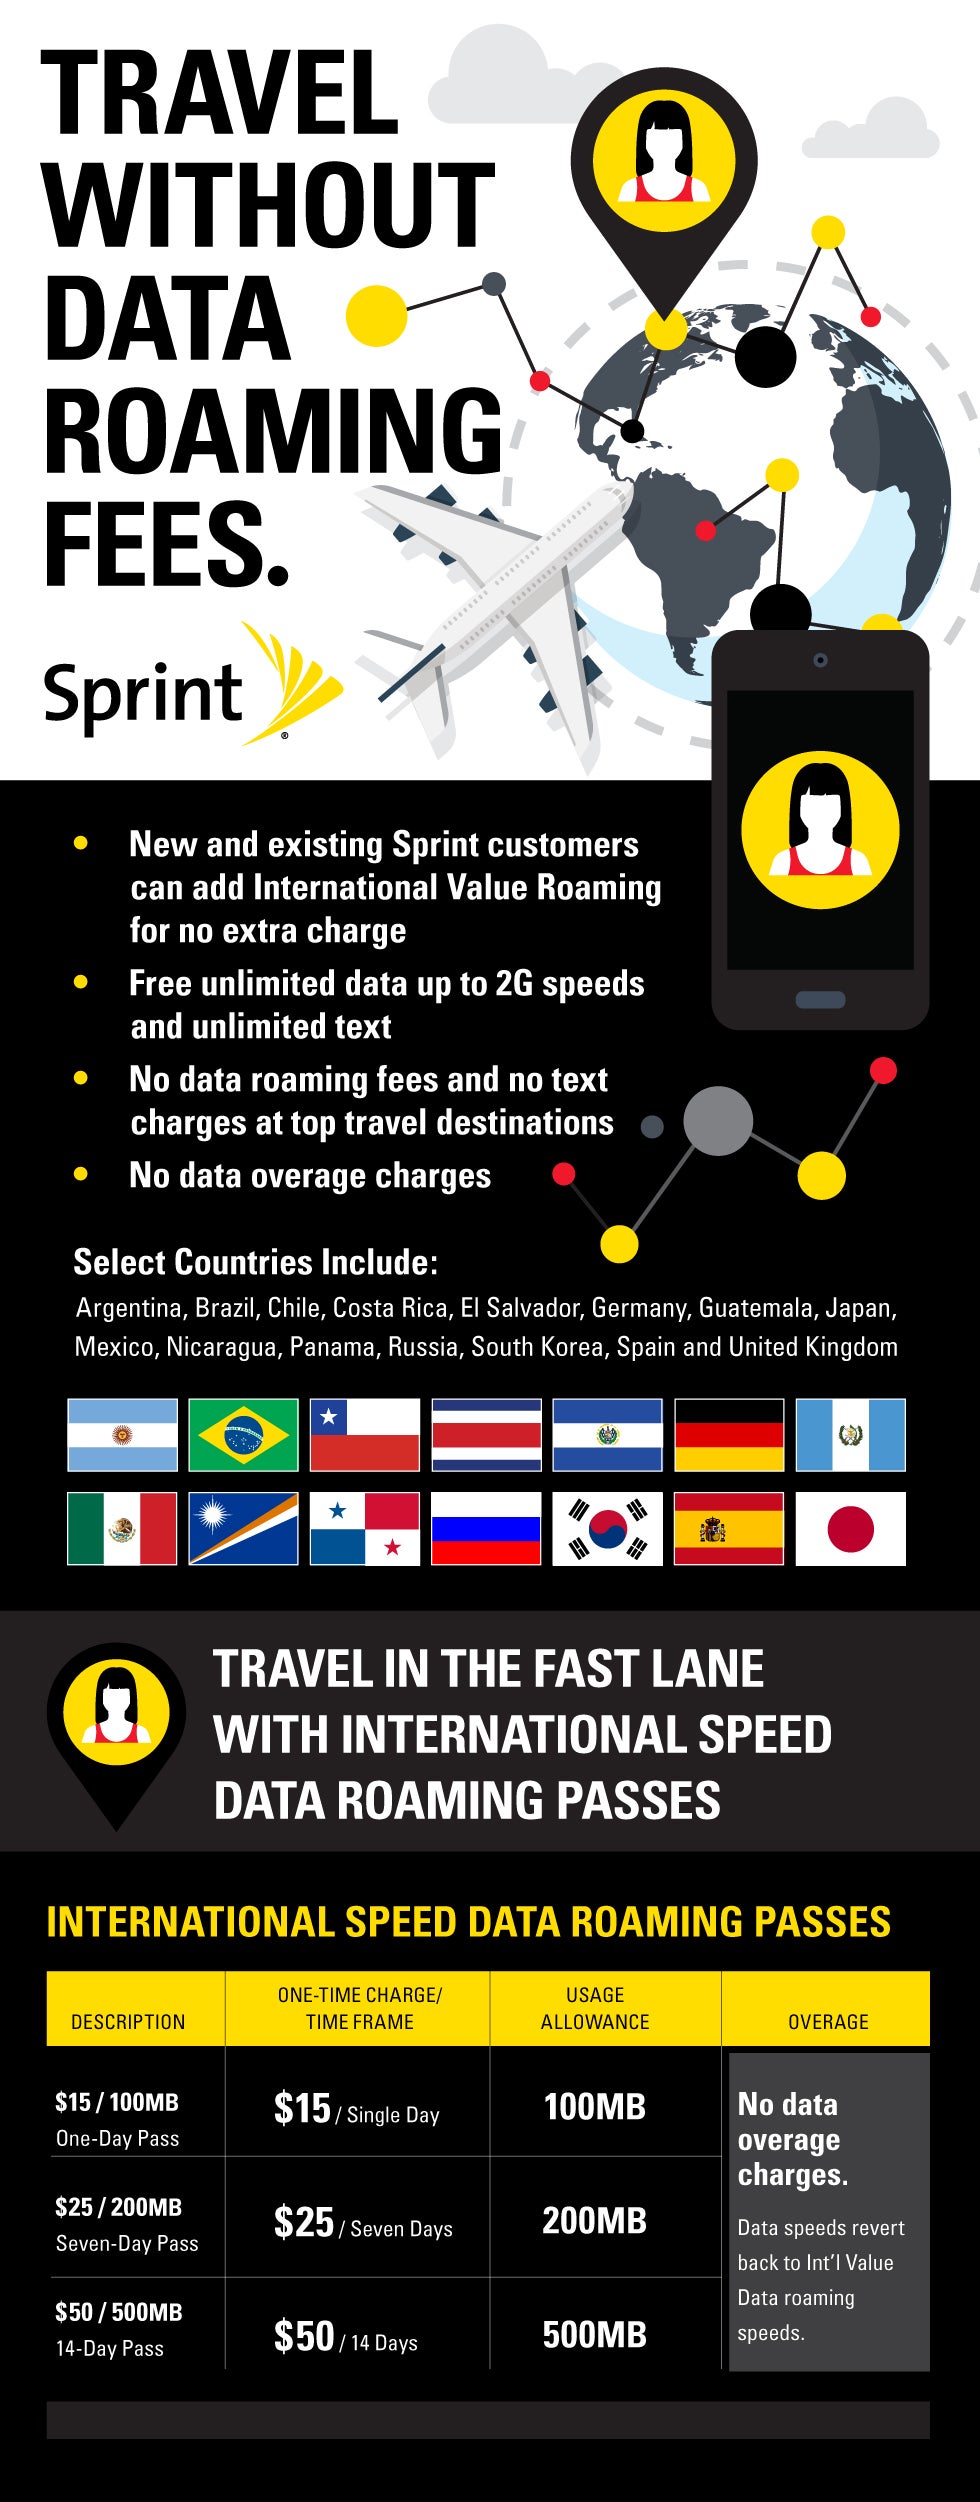 Sprint now offering free international roaming